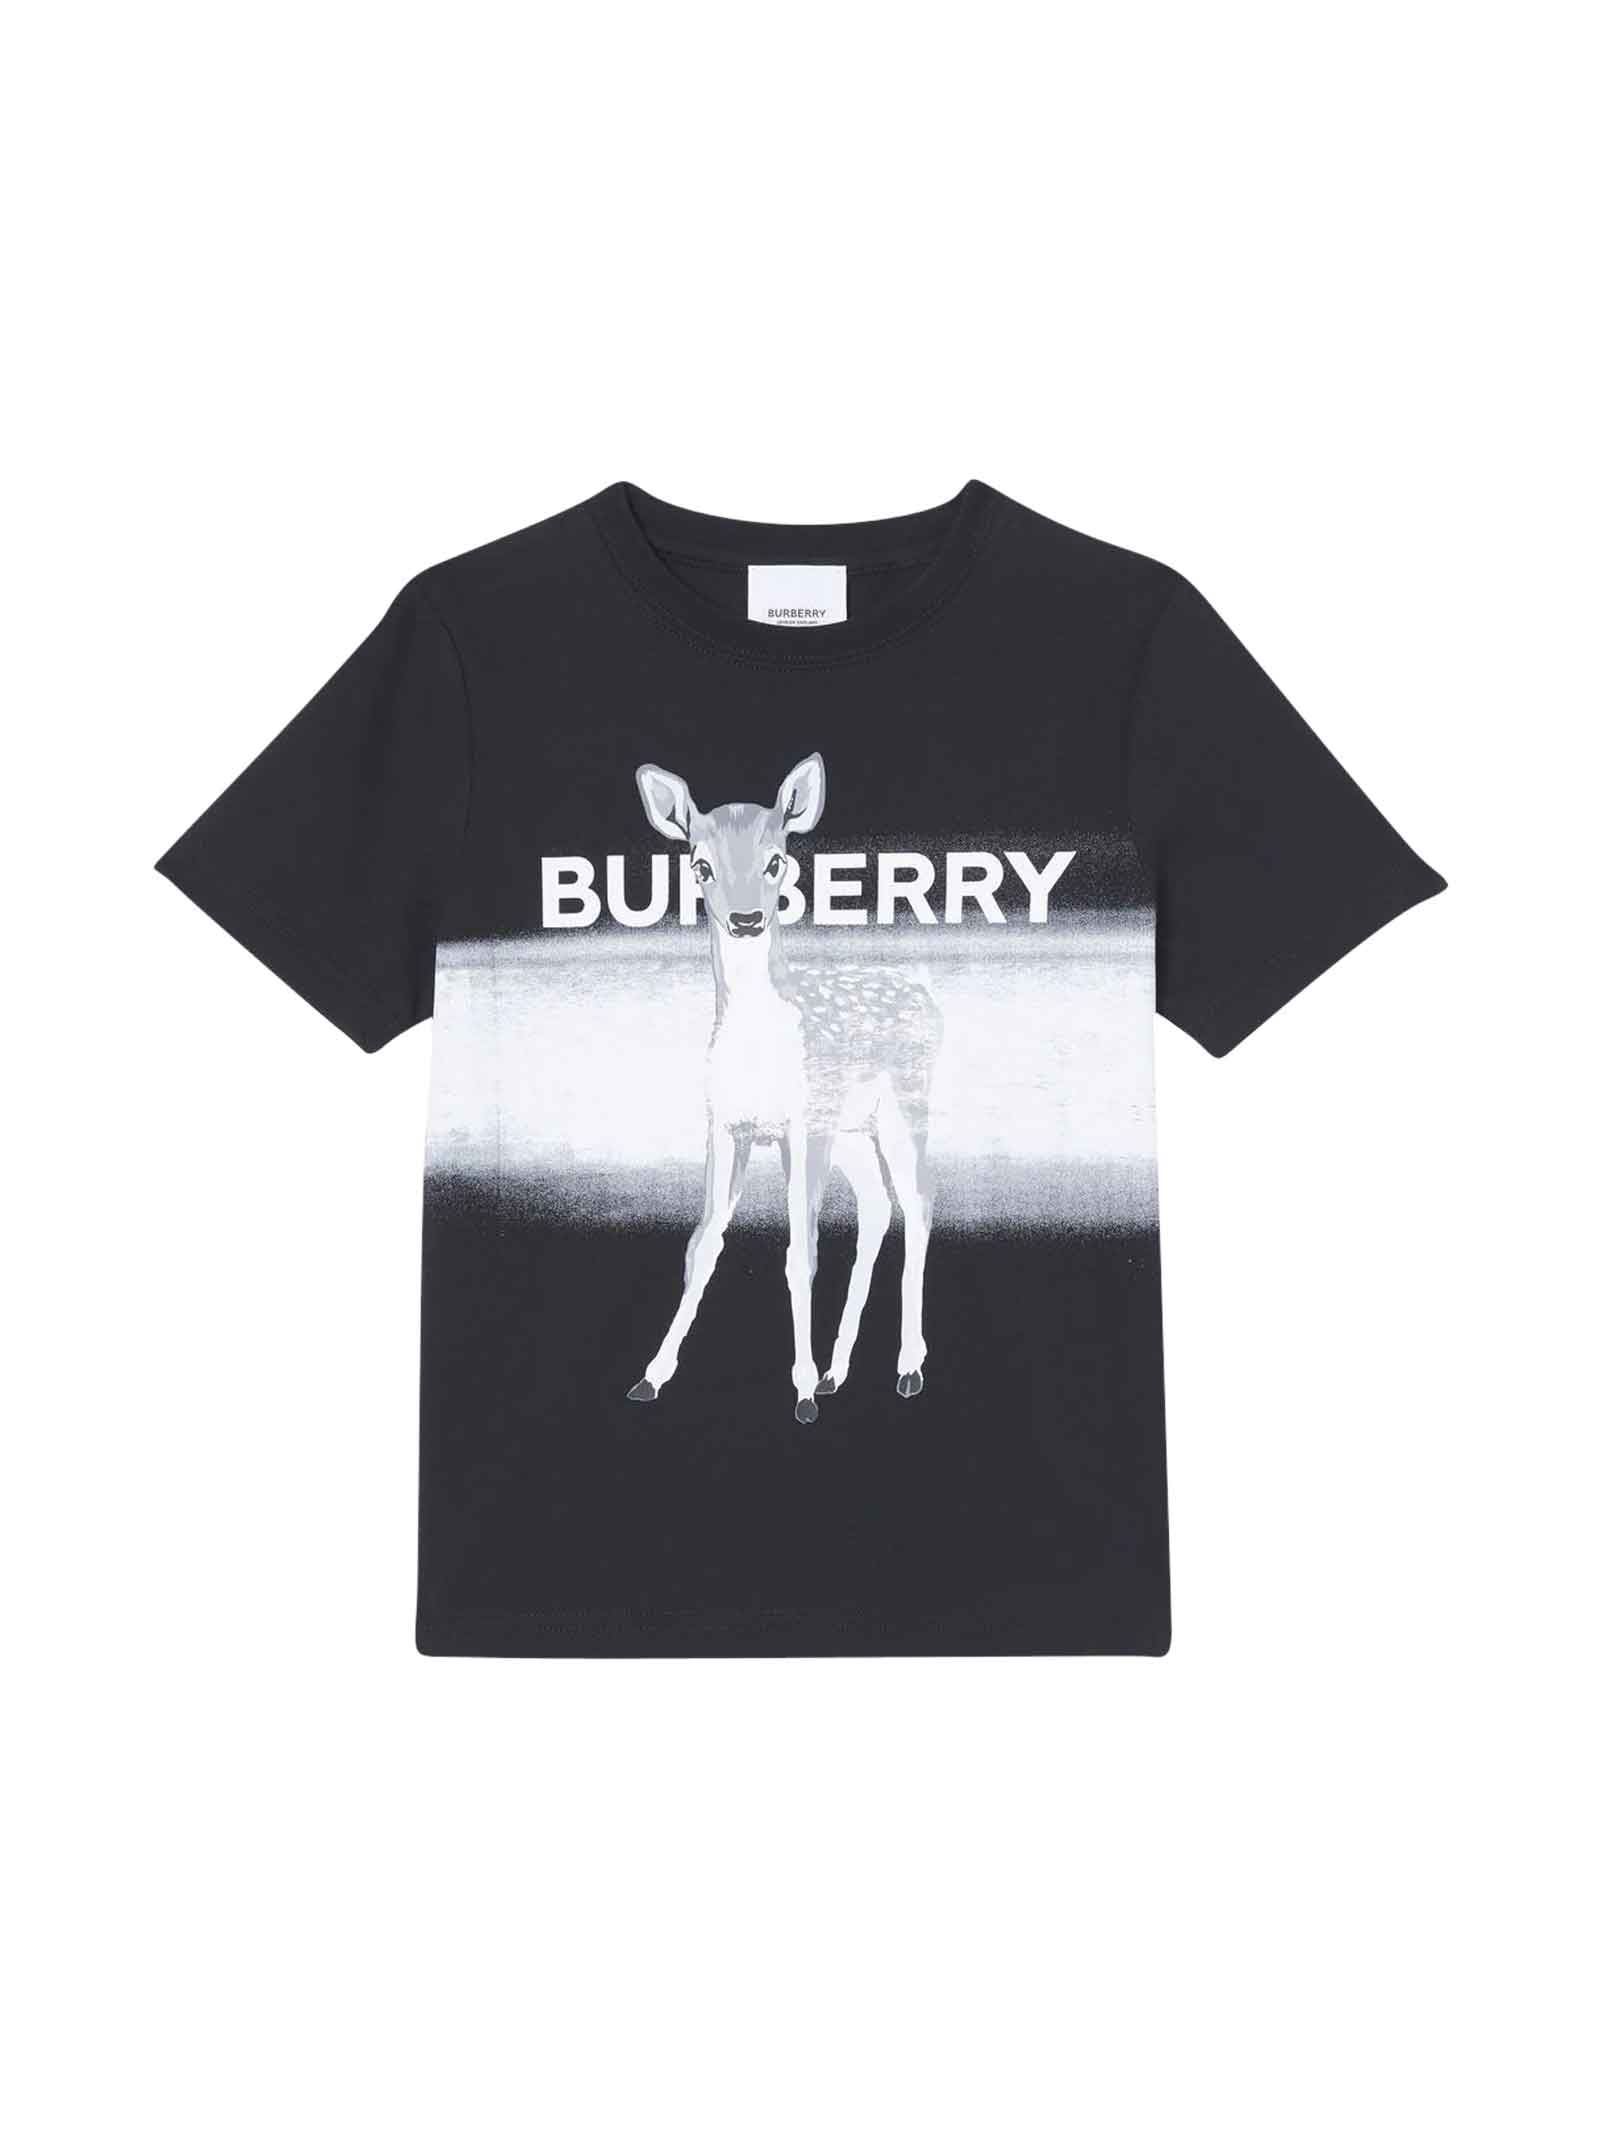 Burberry Black T-shirt With Print